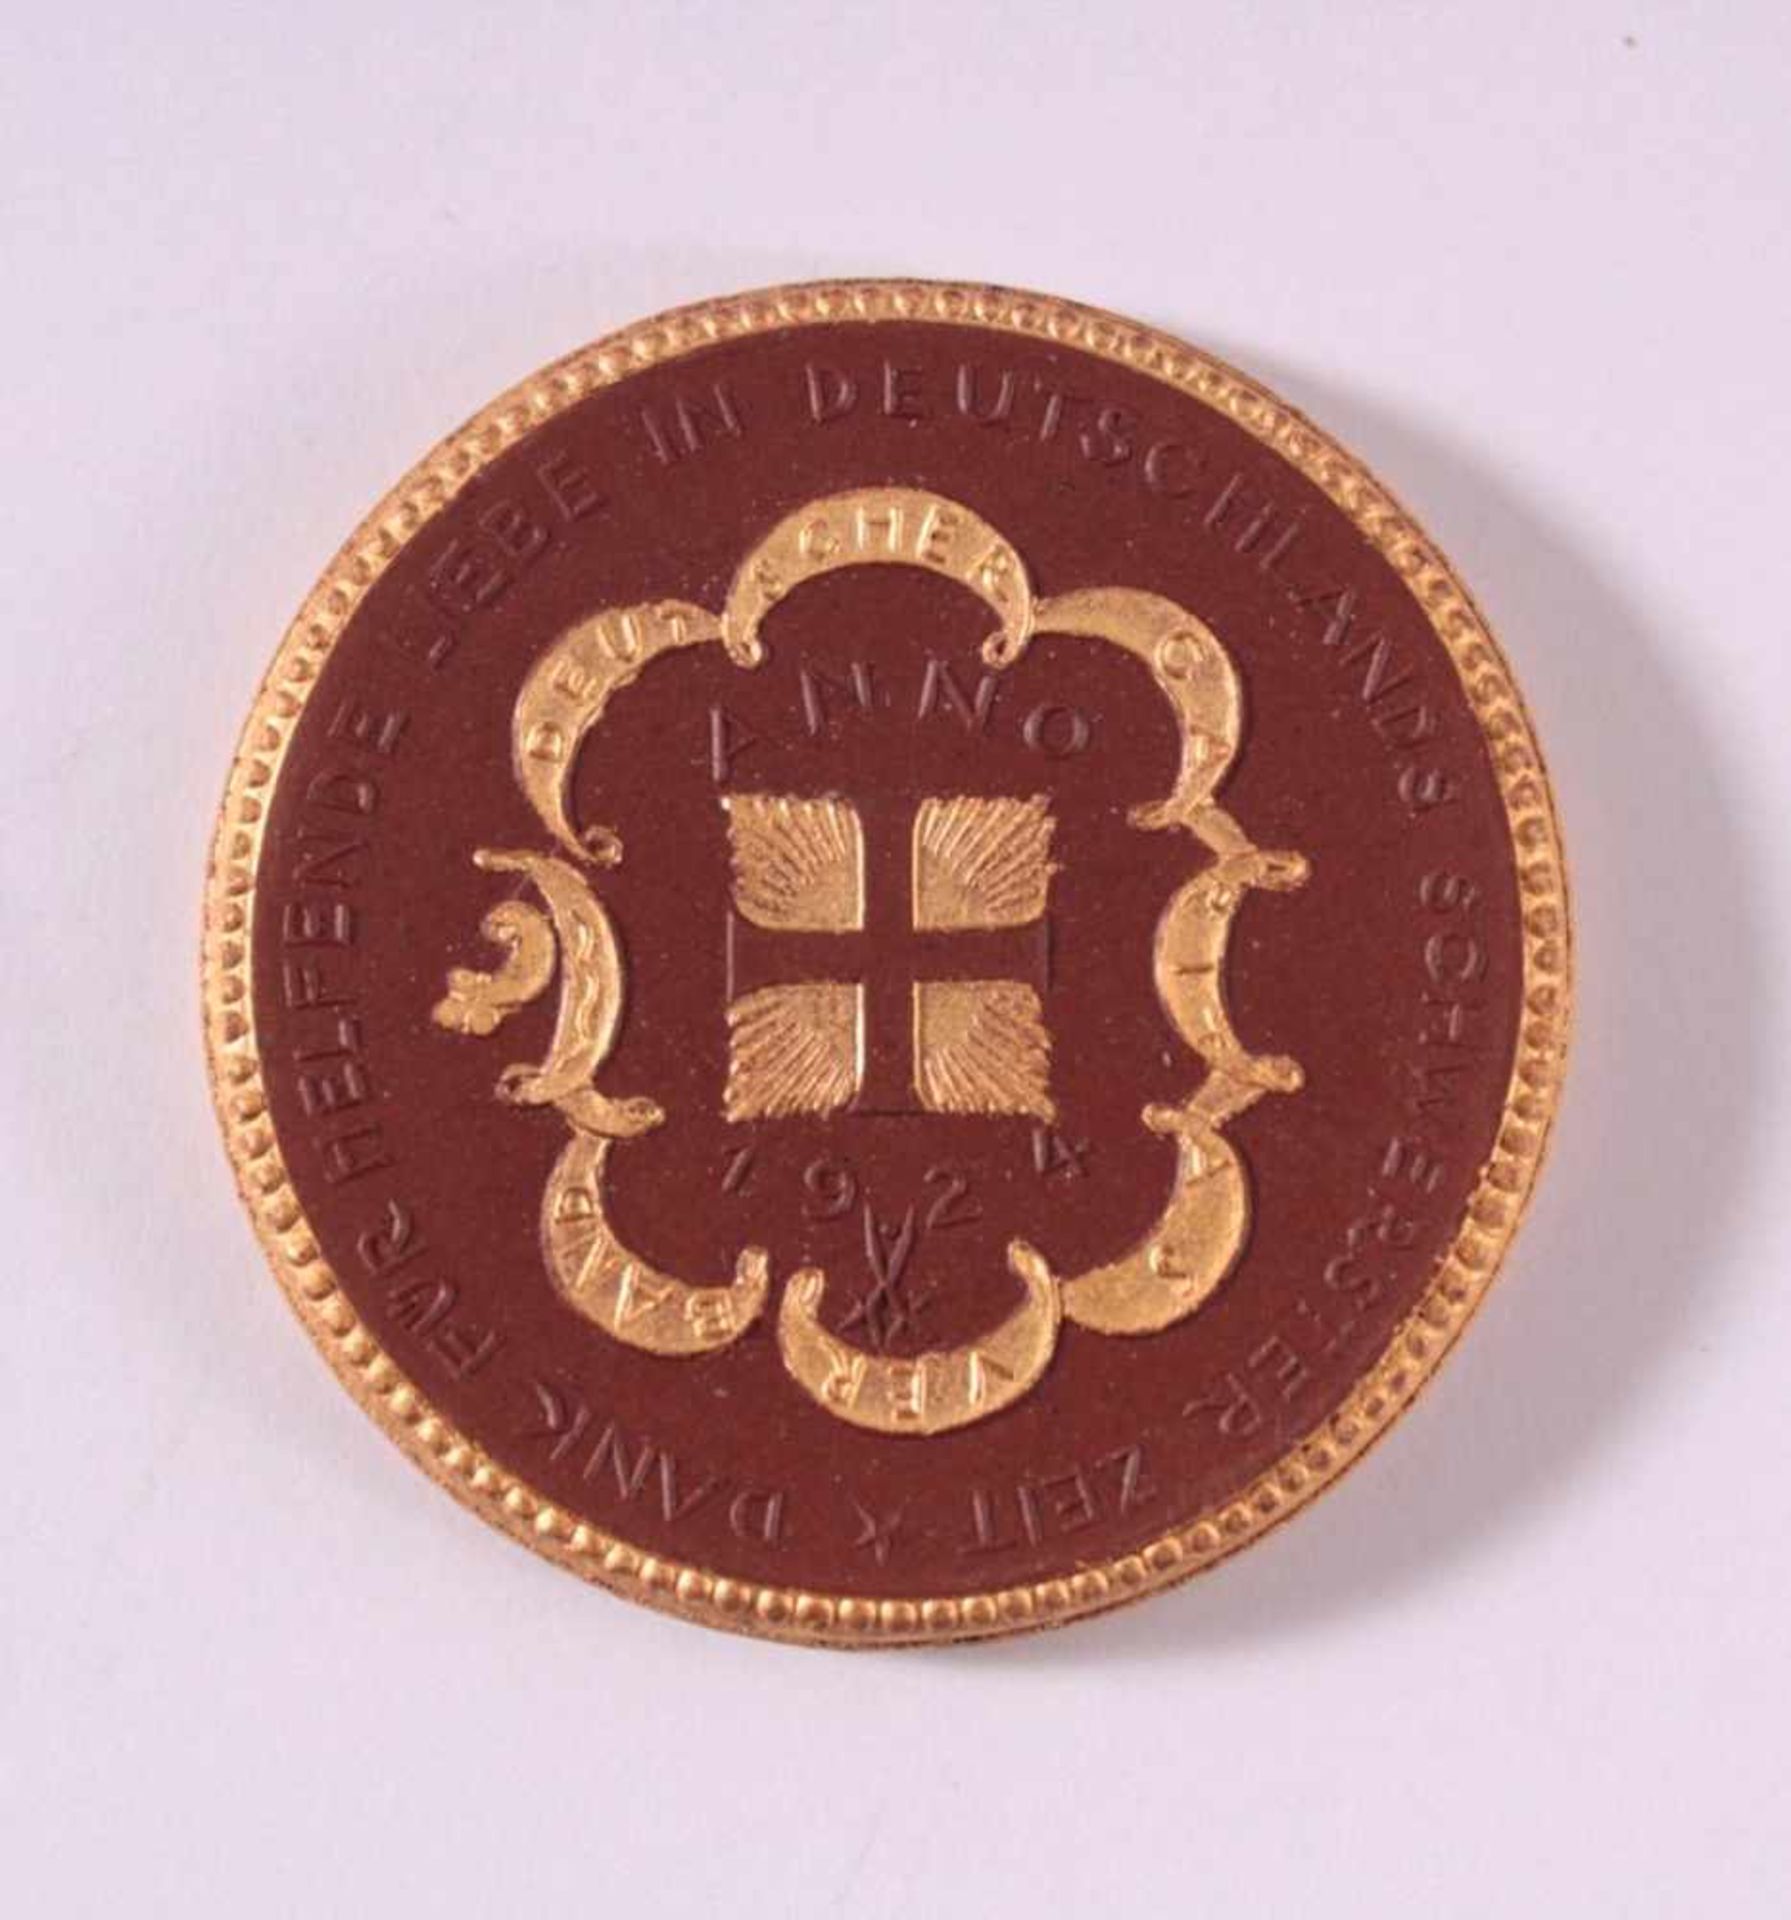 Böttger Steinzeug Medaille Caritas Verband 1924teilvergoldet, ca. D- 5,1 cm - Image 2 of 2